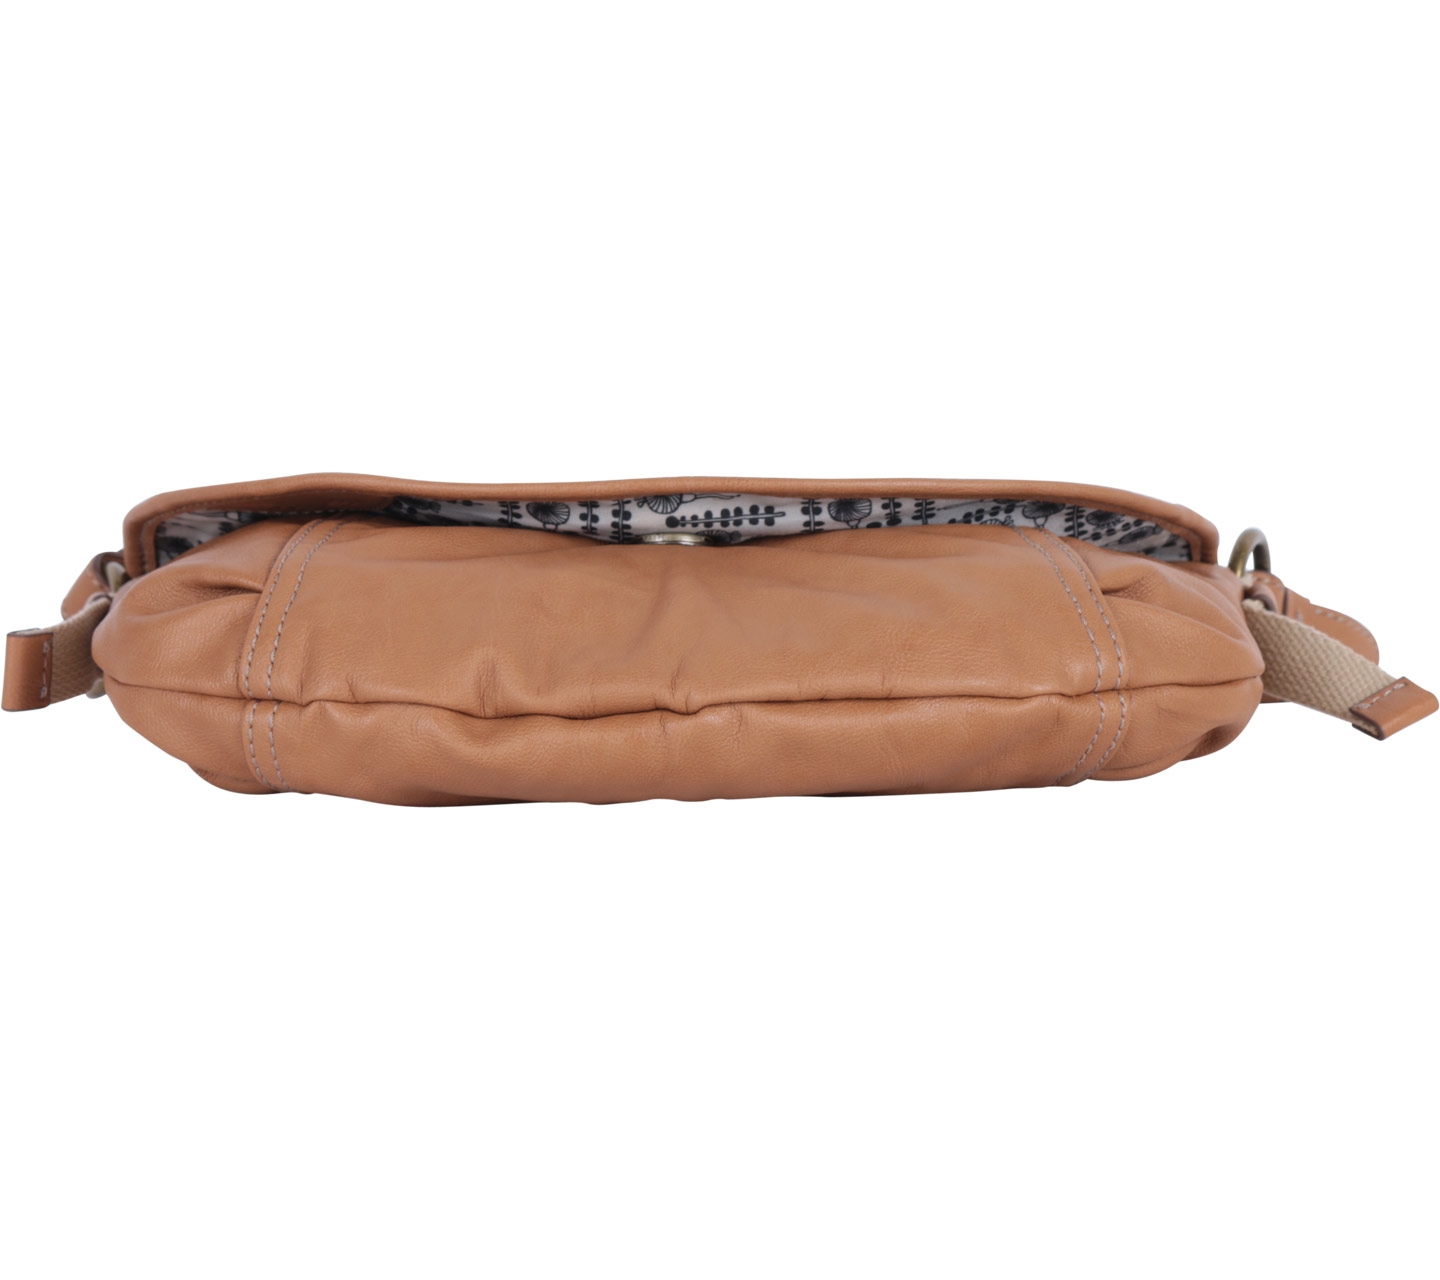 Esprit Brown Semi-Circle Leather Handbag